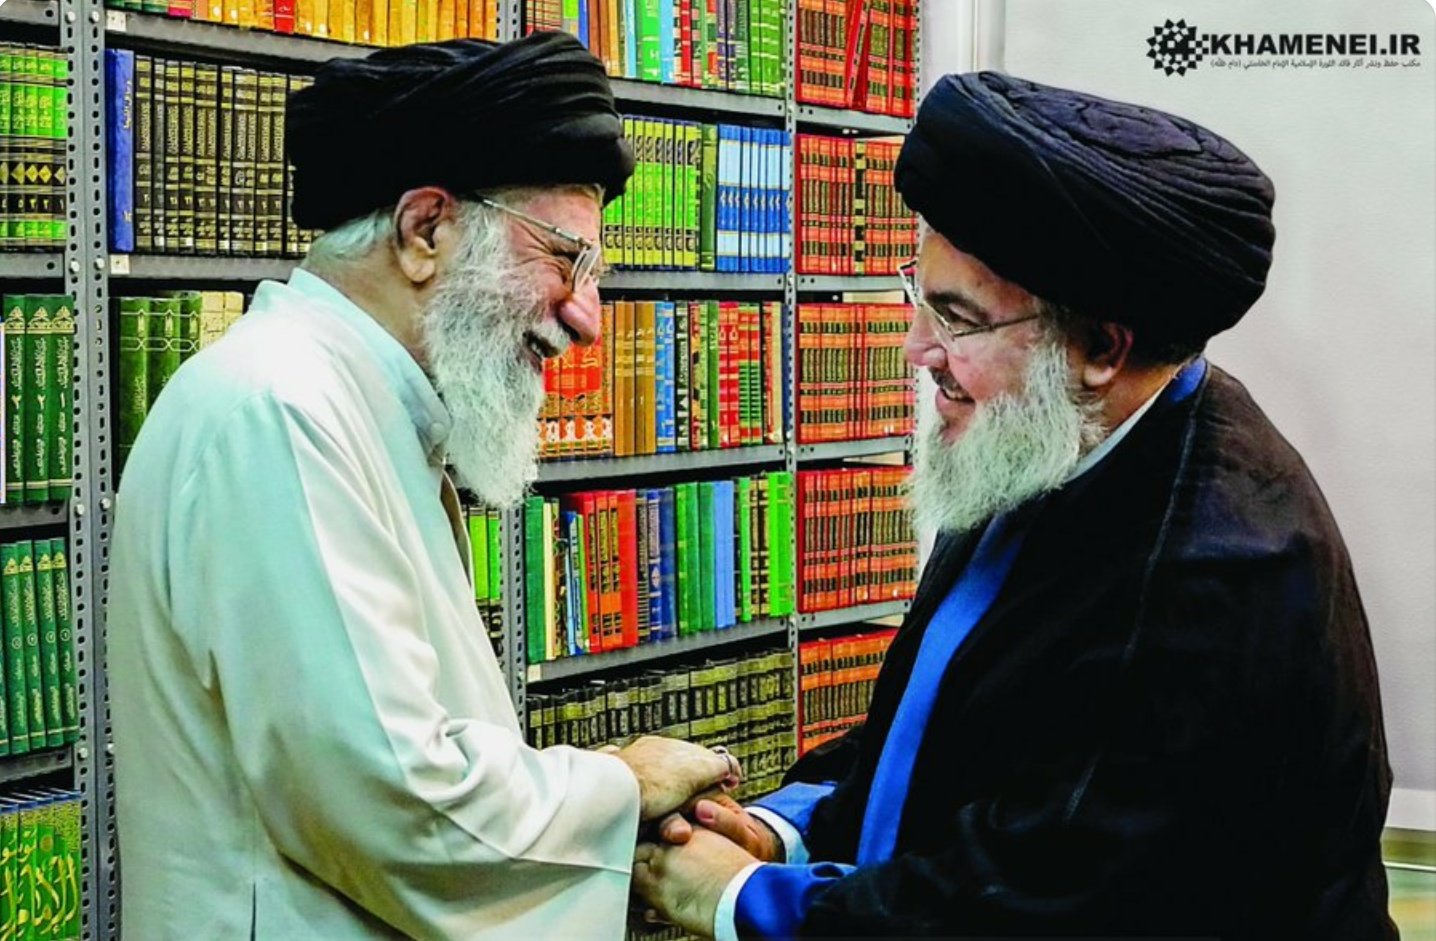 khamenei & nasrallah